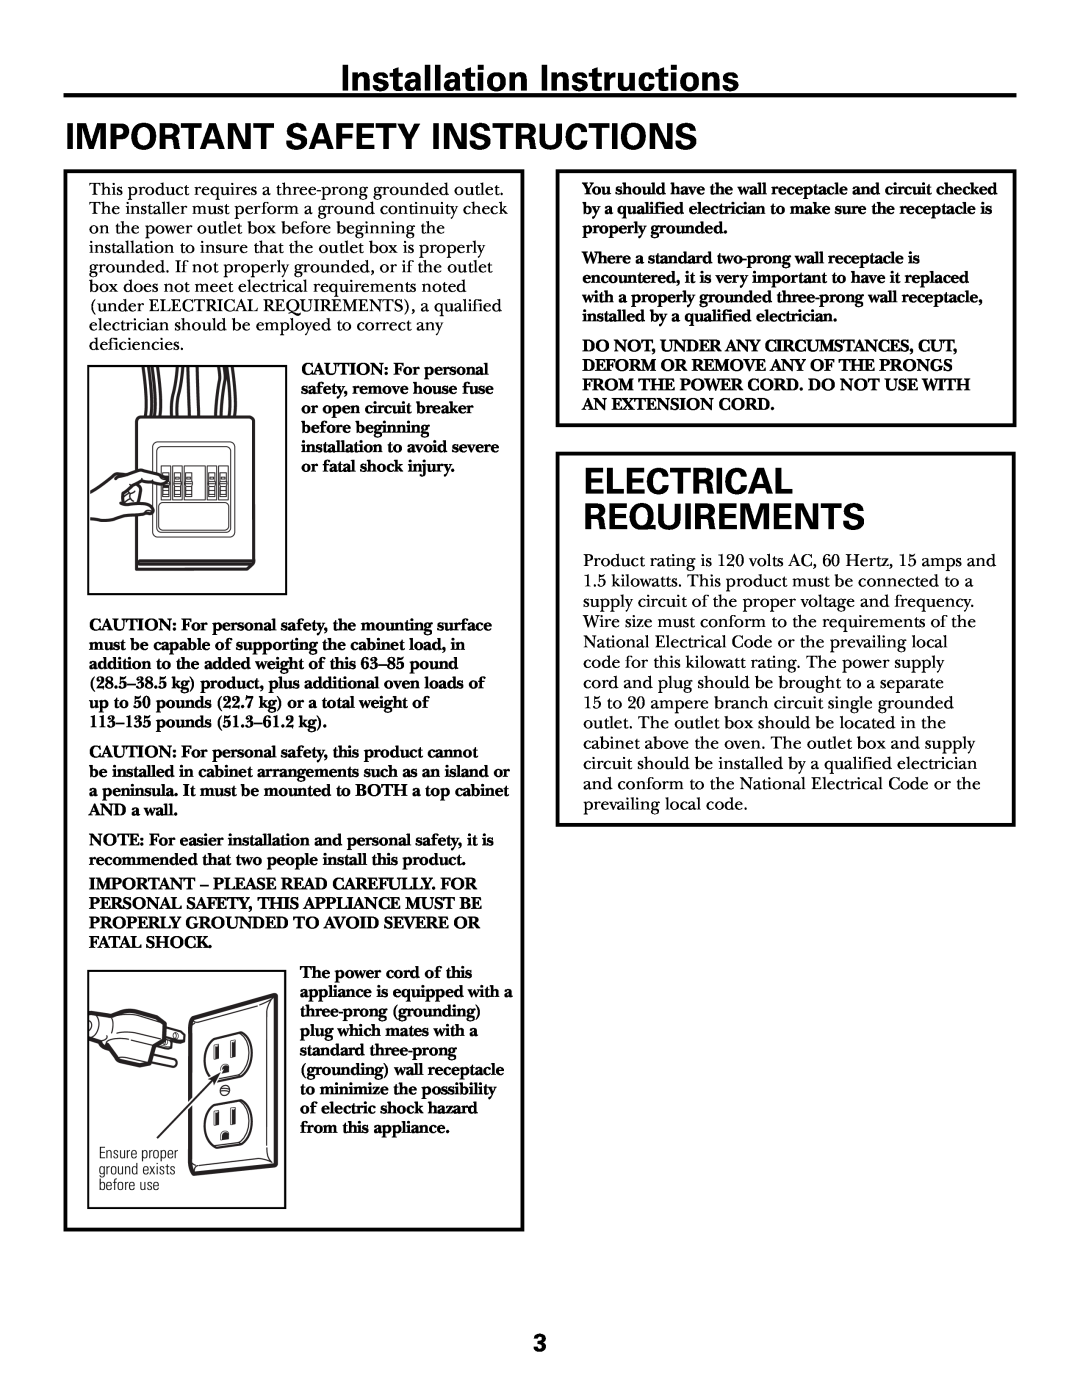 GE JVM1790 installation instructions Installation Instructions IMPORTANT SAFETY INSTRUCTIONS, Electrical Requirements 